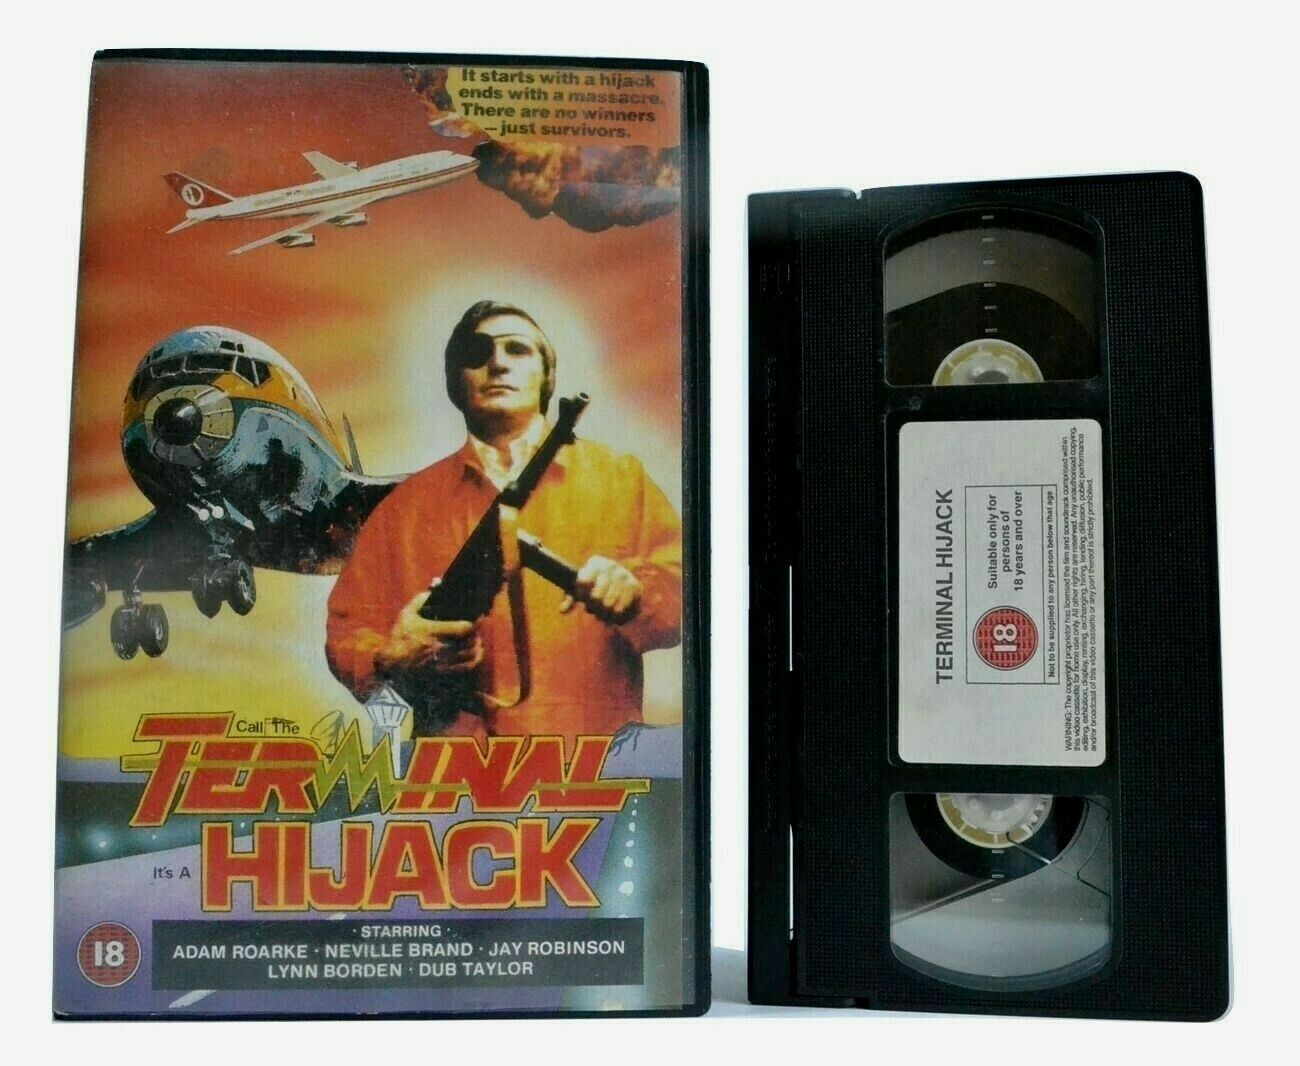 Terminal Hijack: AKA "This Is A Hijack" - Action Crime (1979) - A.Roaryke - VHS-